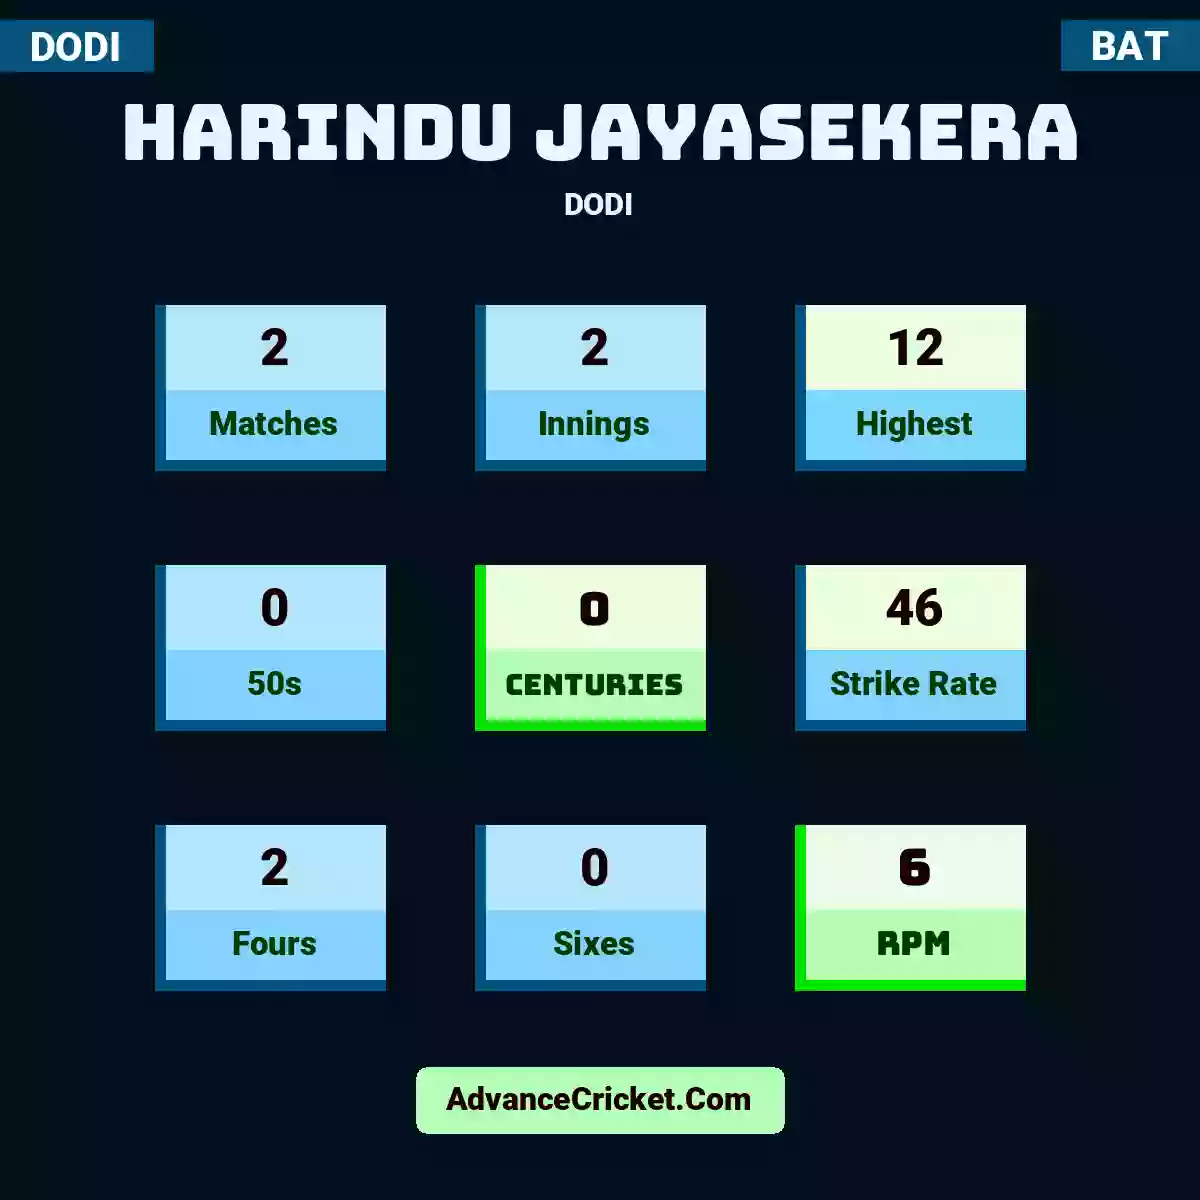 Harindu Jayasekera DODI , Harindu Jayasekera played 2 matches, scored 12 runs as highest, 0 half-centuries, and 0 centuries, with a strike rate of 46. H.Jayasekera hit 2 fours and 0 sixes, with an RPM of 6.